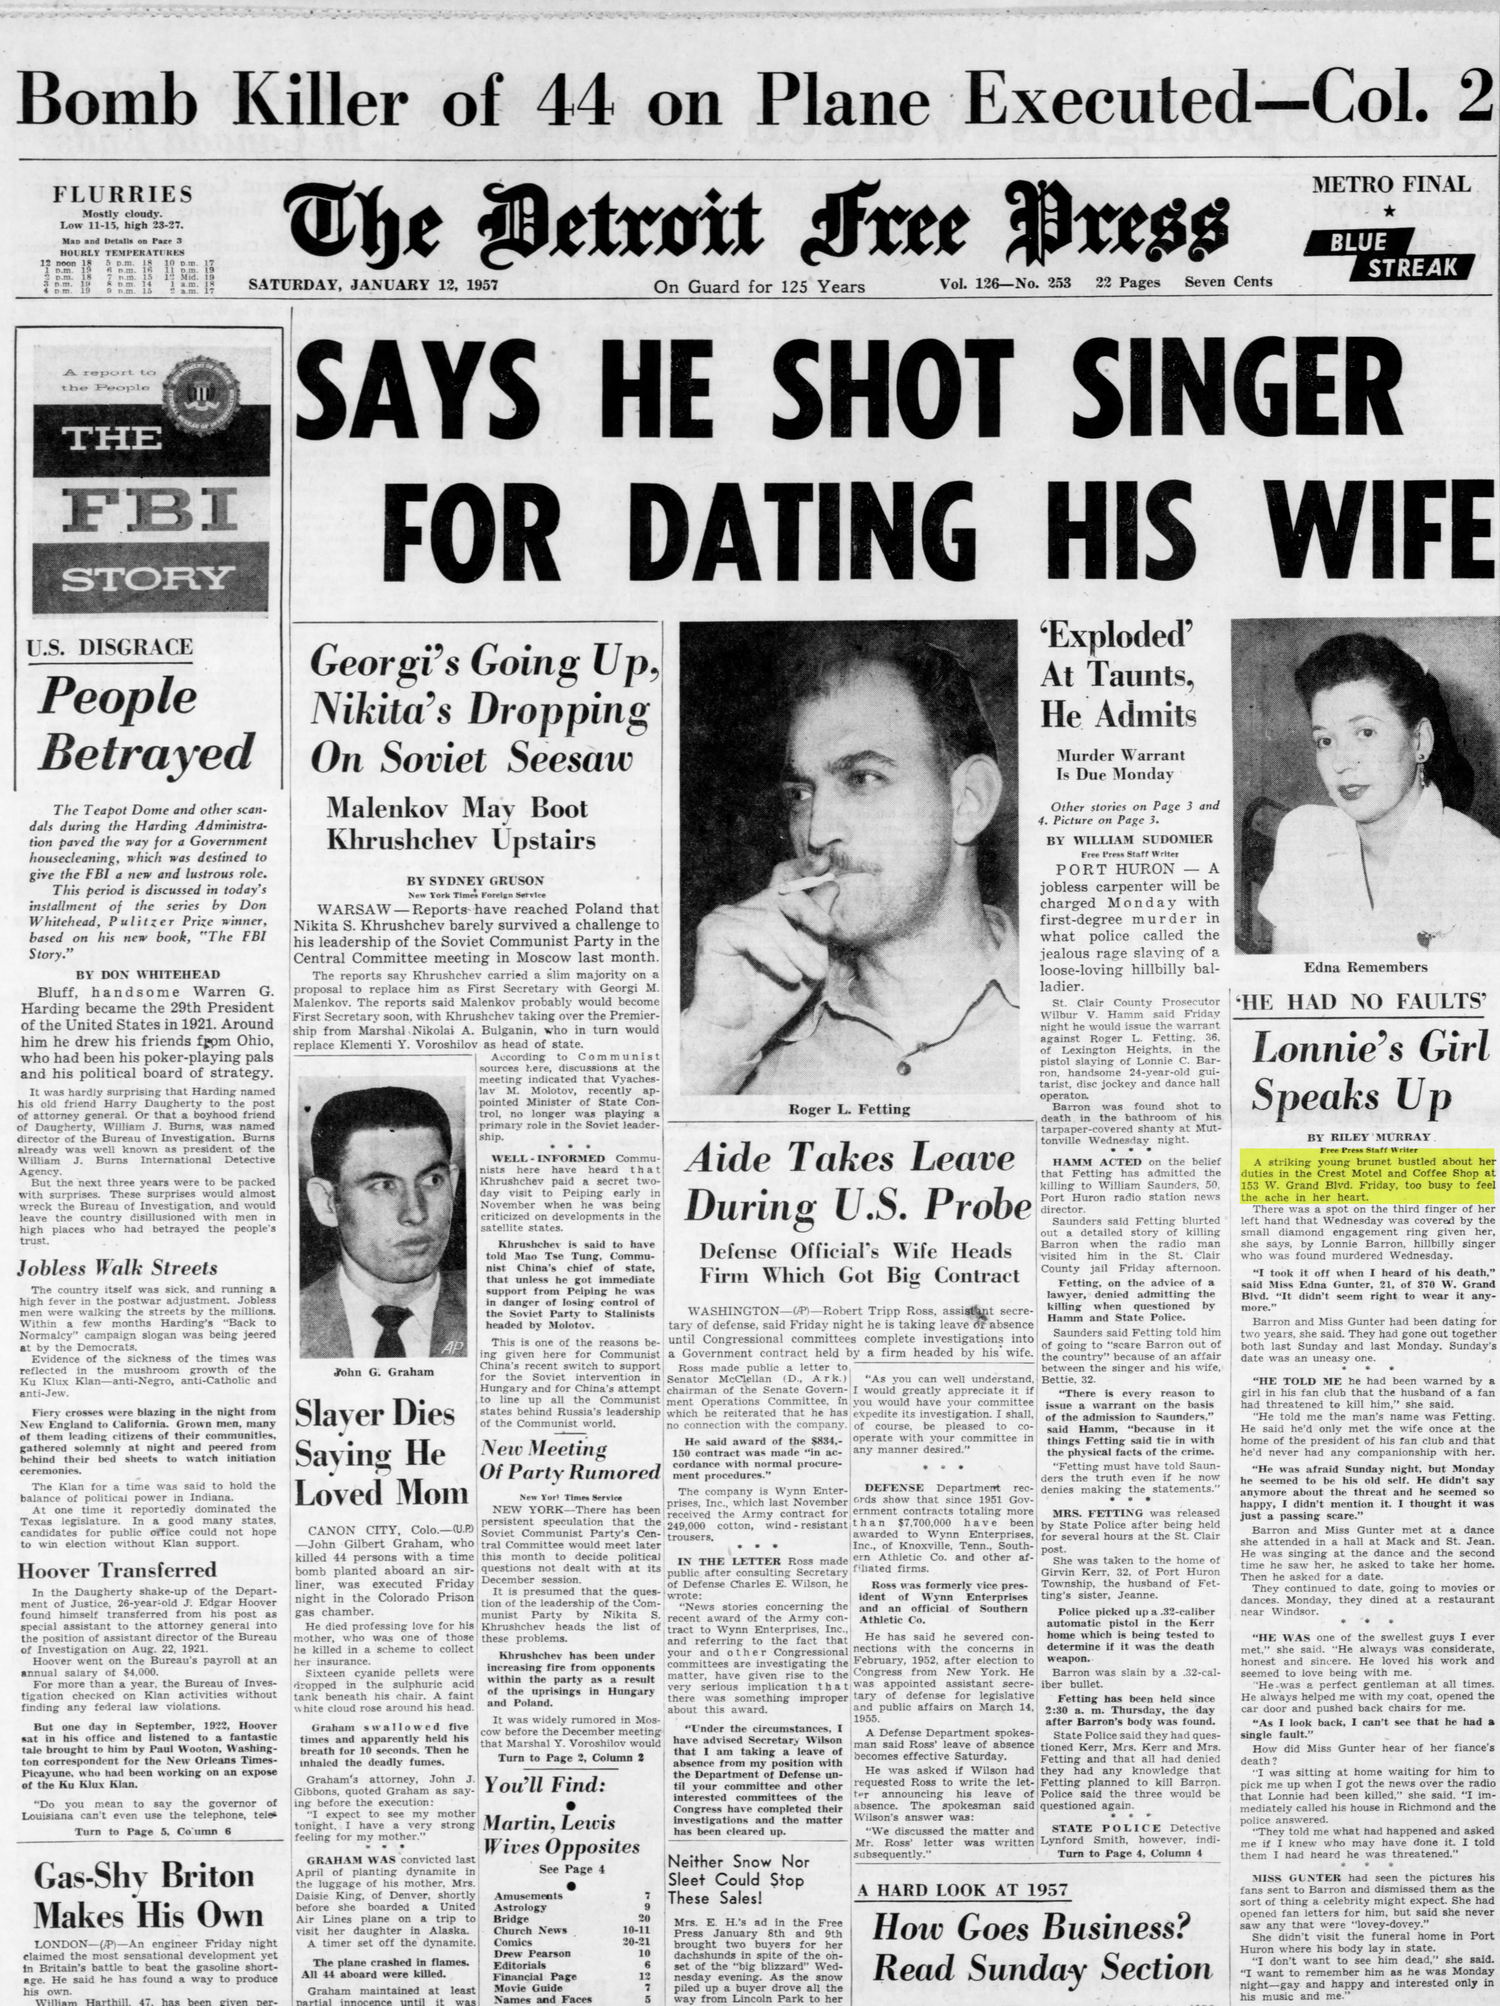 Crest Motel - Sat Jan 12 1957 Article On Murder